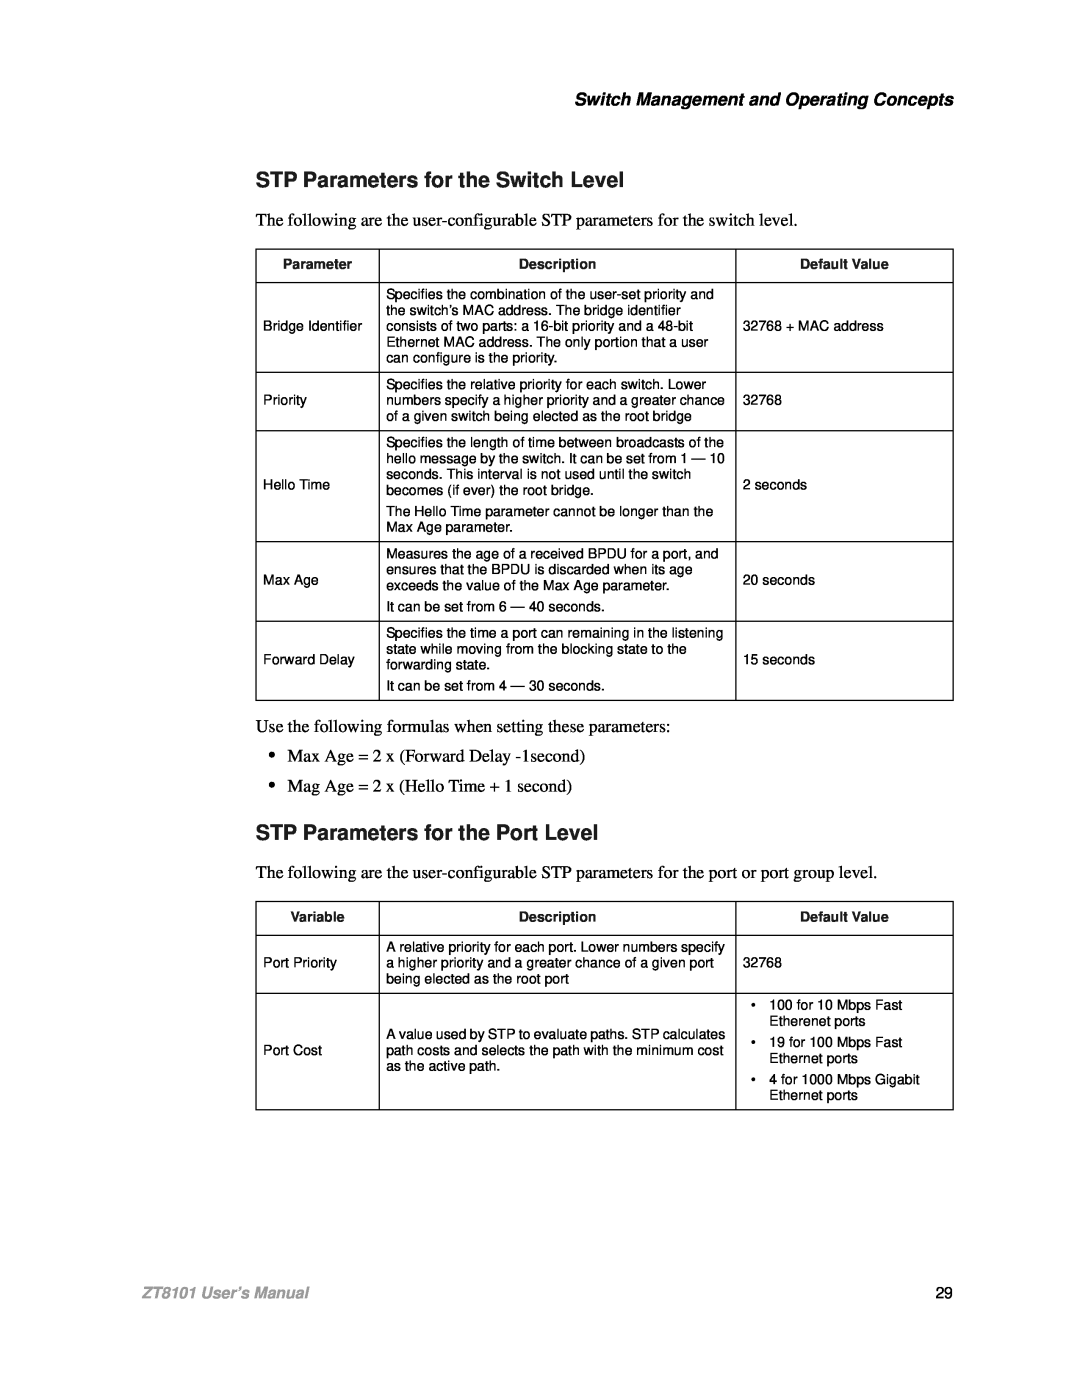 Intel ZT8101 user manual STP Parameters for the Switch Level, STP Parameters for the Port Level 